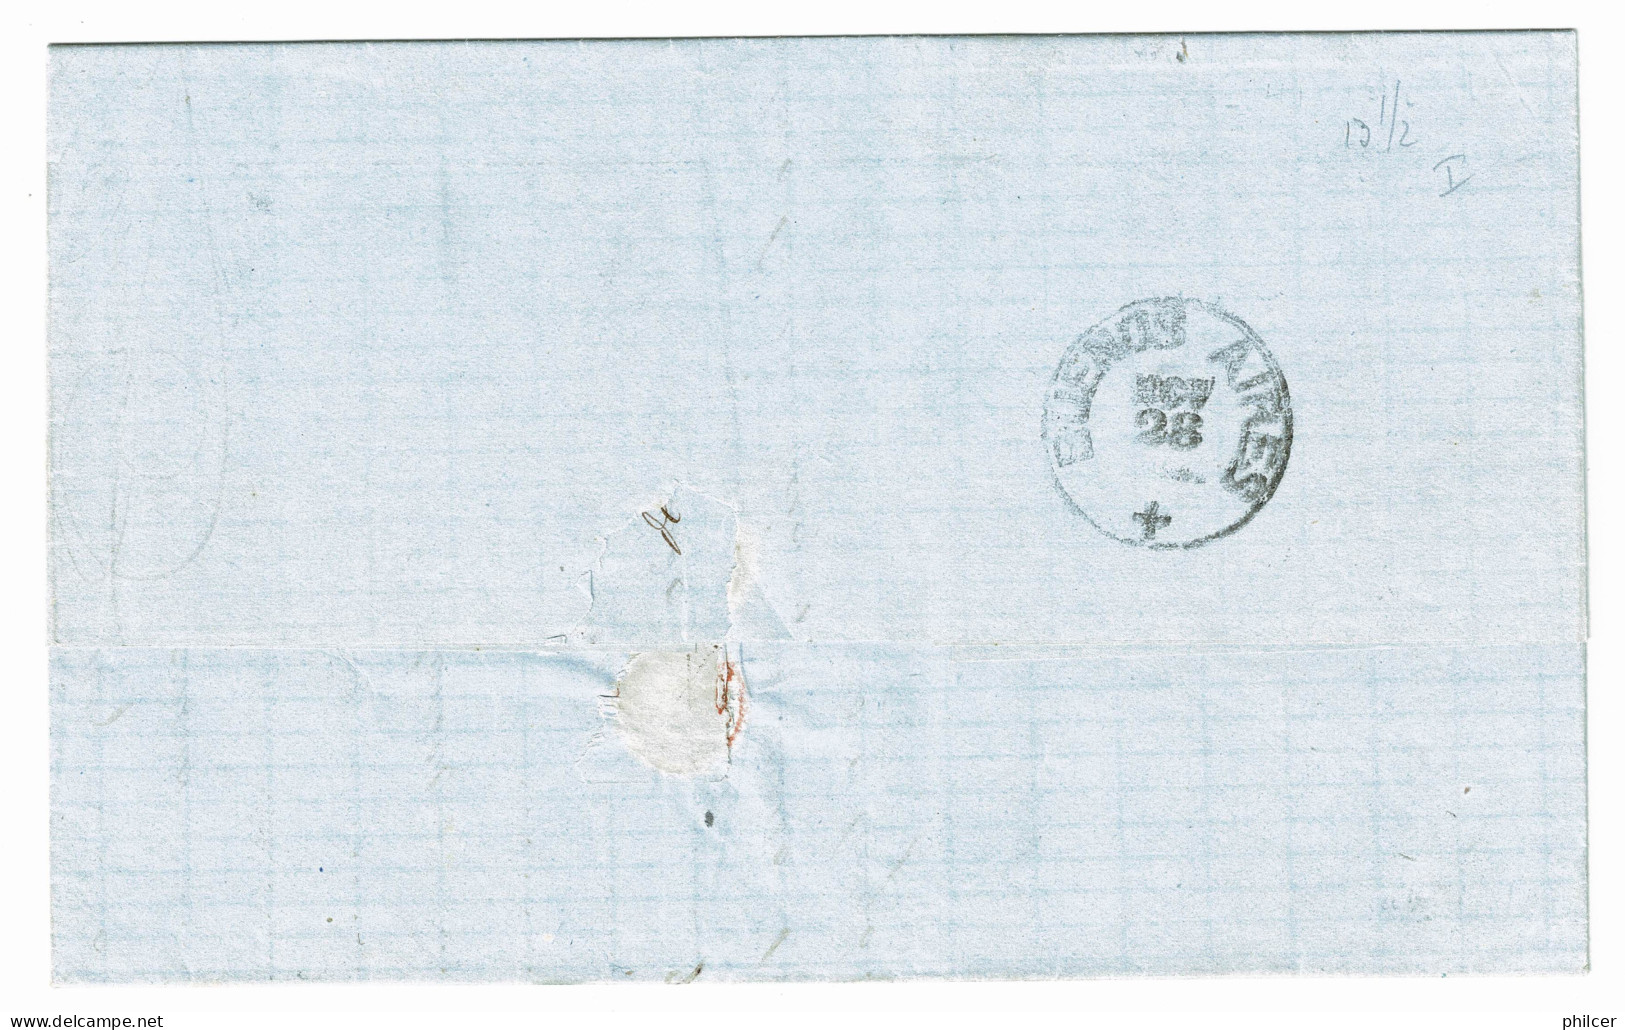 Portugal, 1877, # 41c Dent. 13 1/2, Para Buenos Aires, Com Certificado - Oblitérés